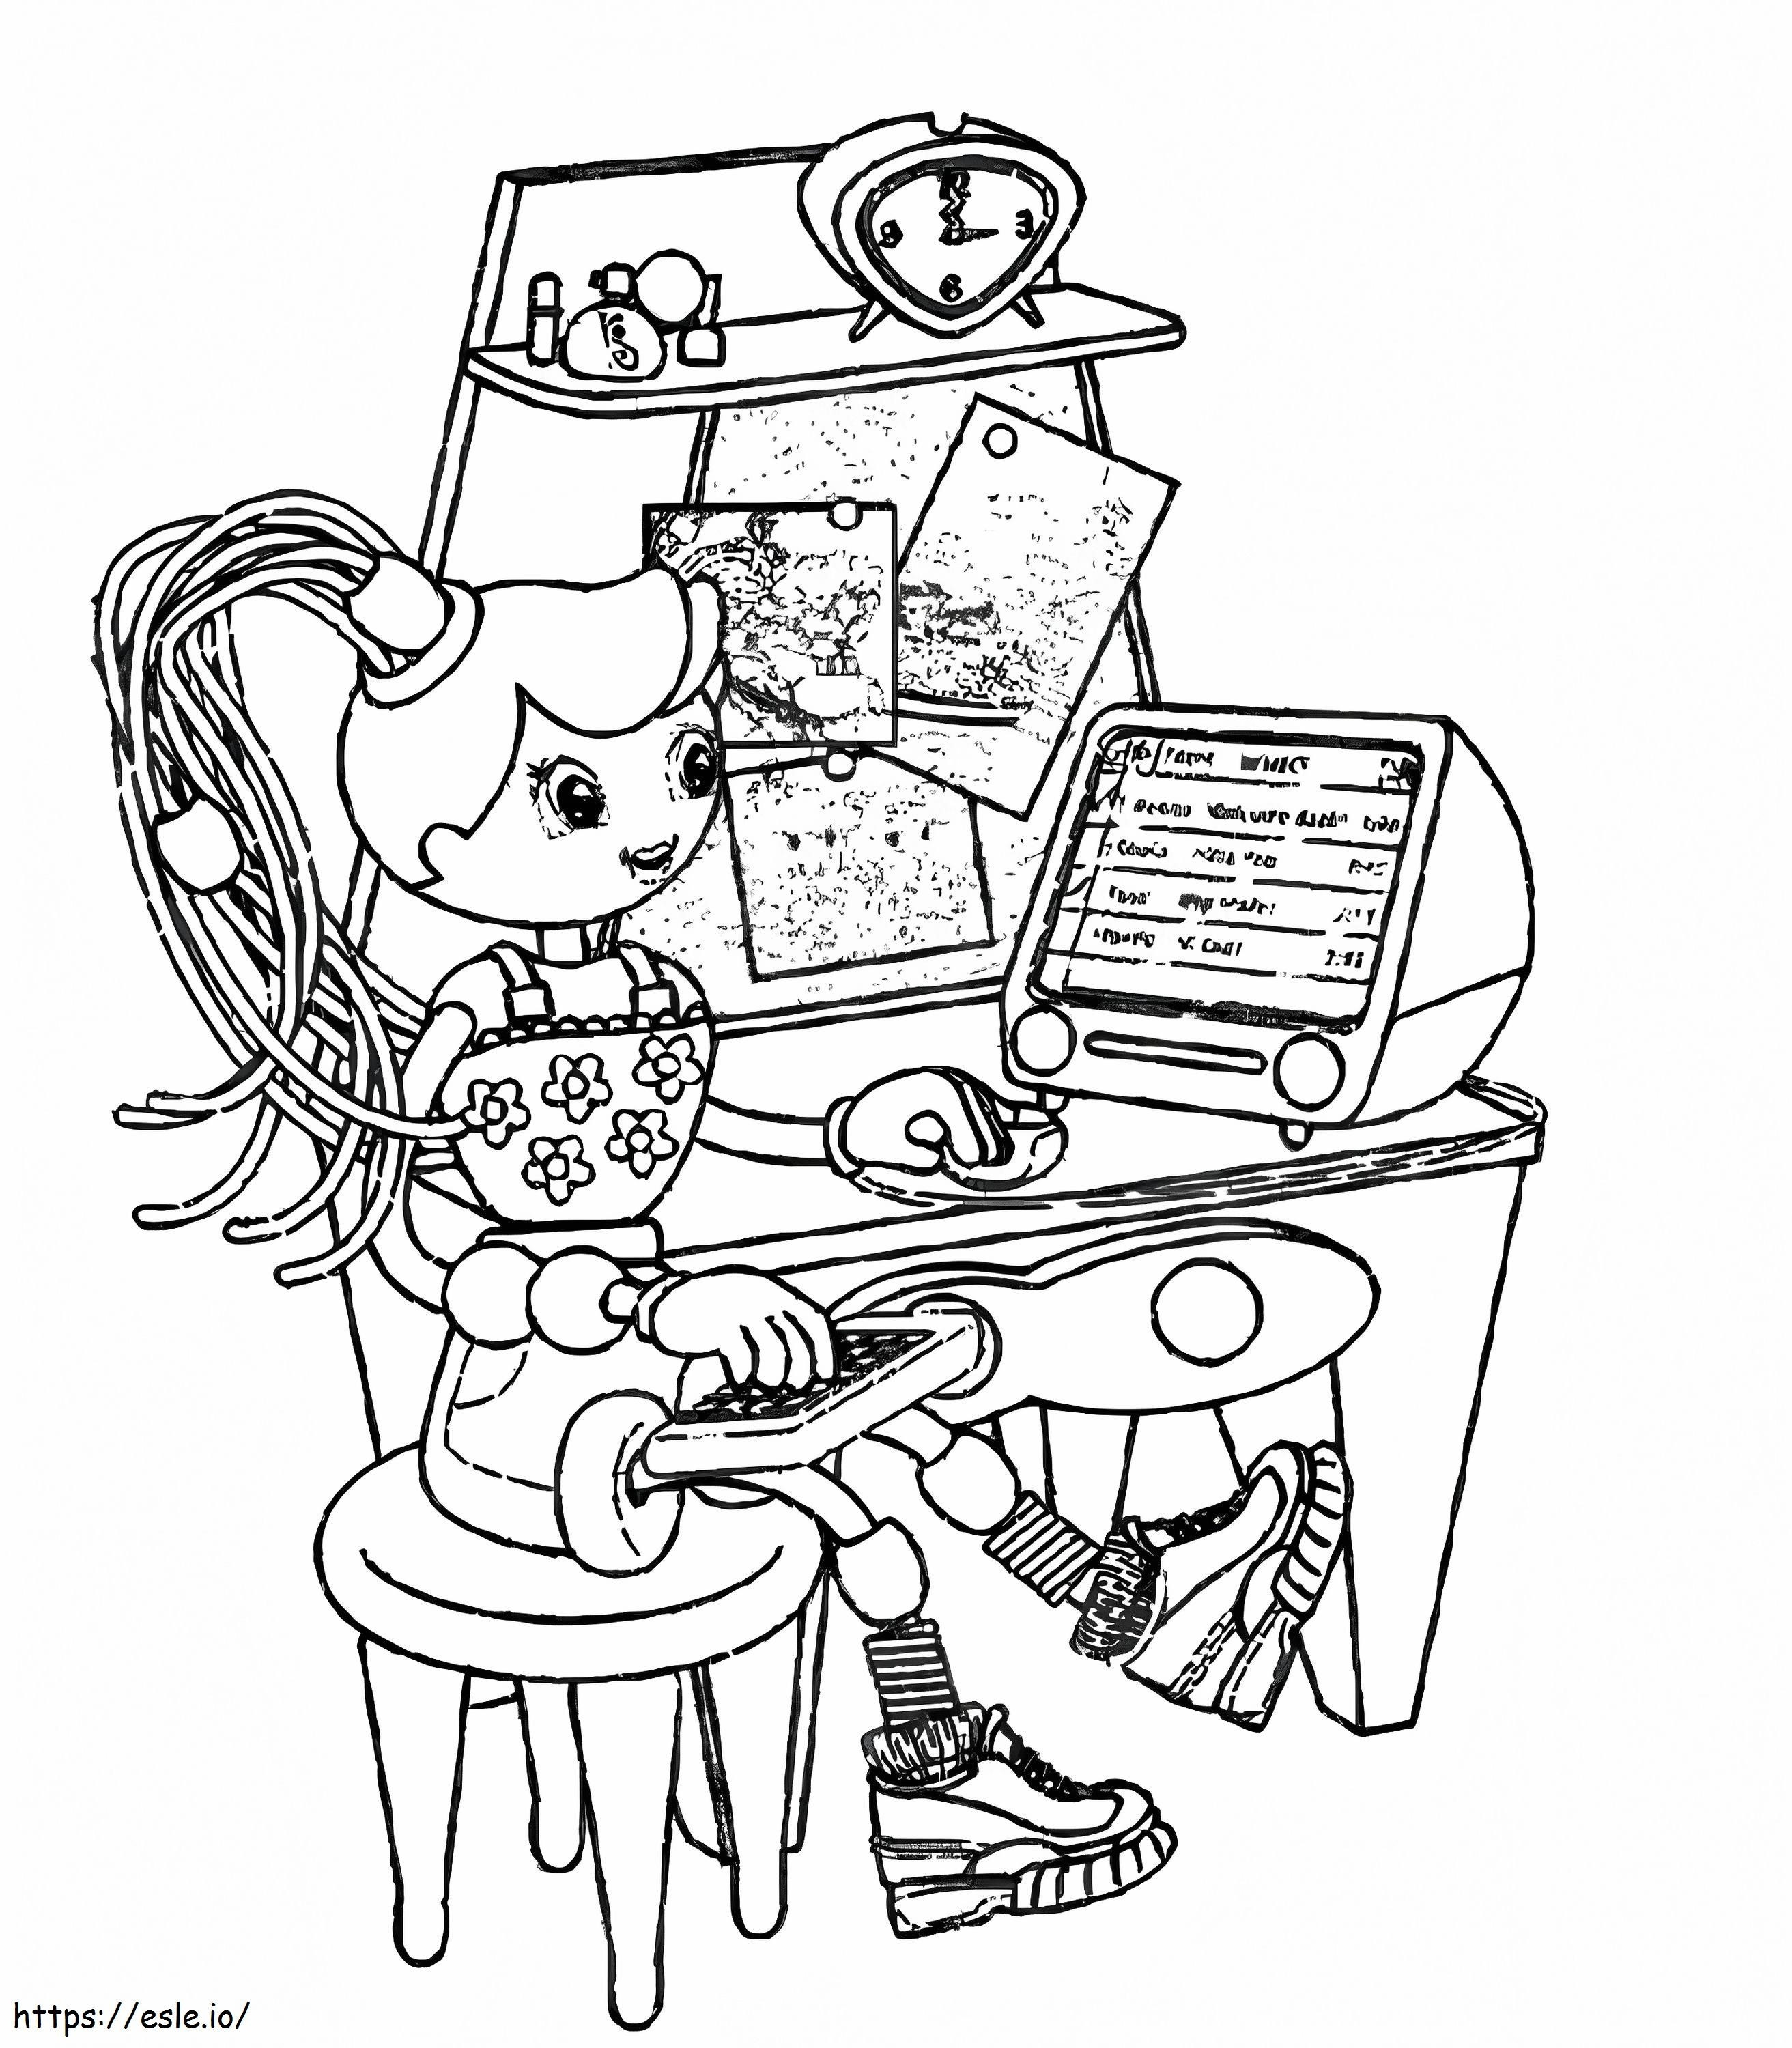 Betty Spaghetti usando la computadora para colorear